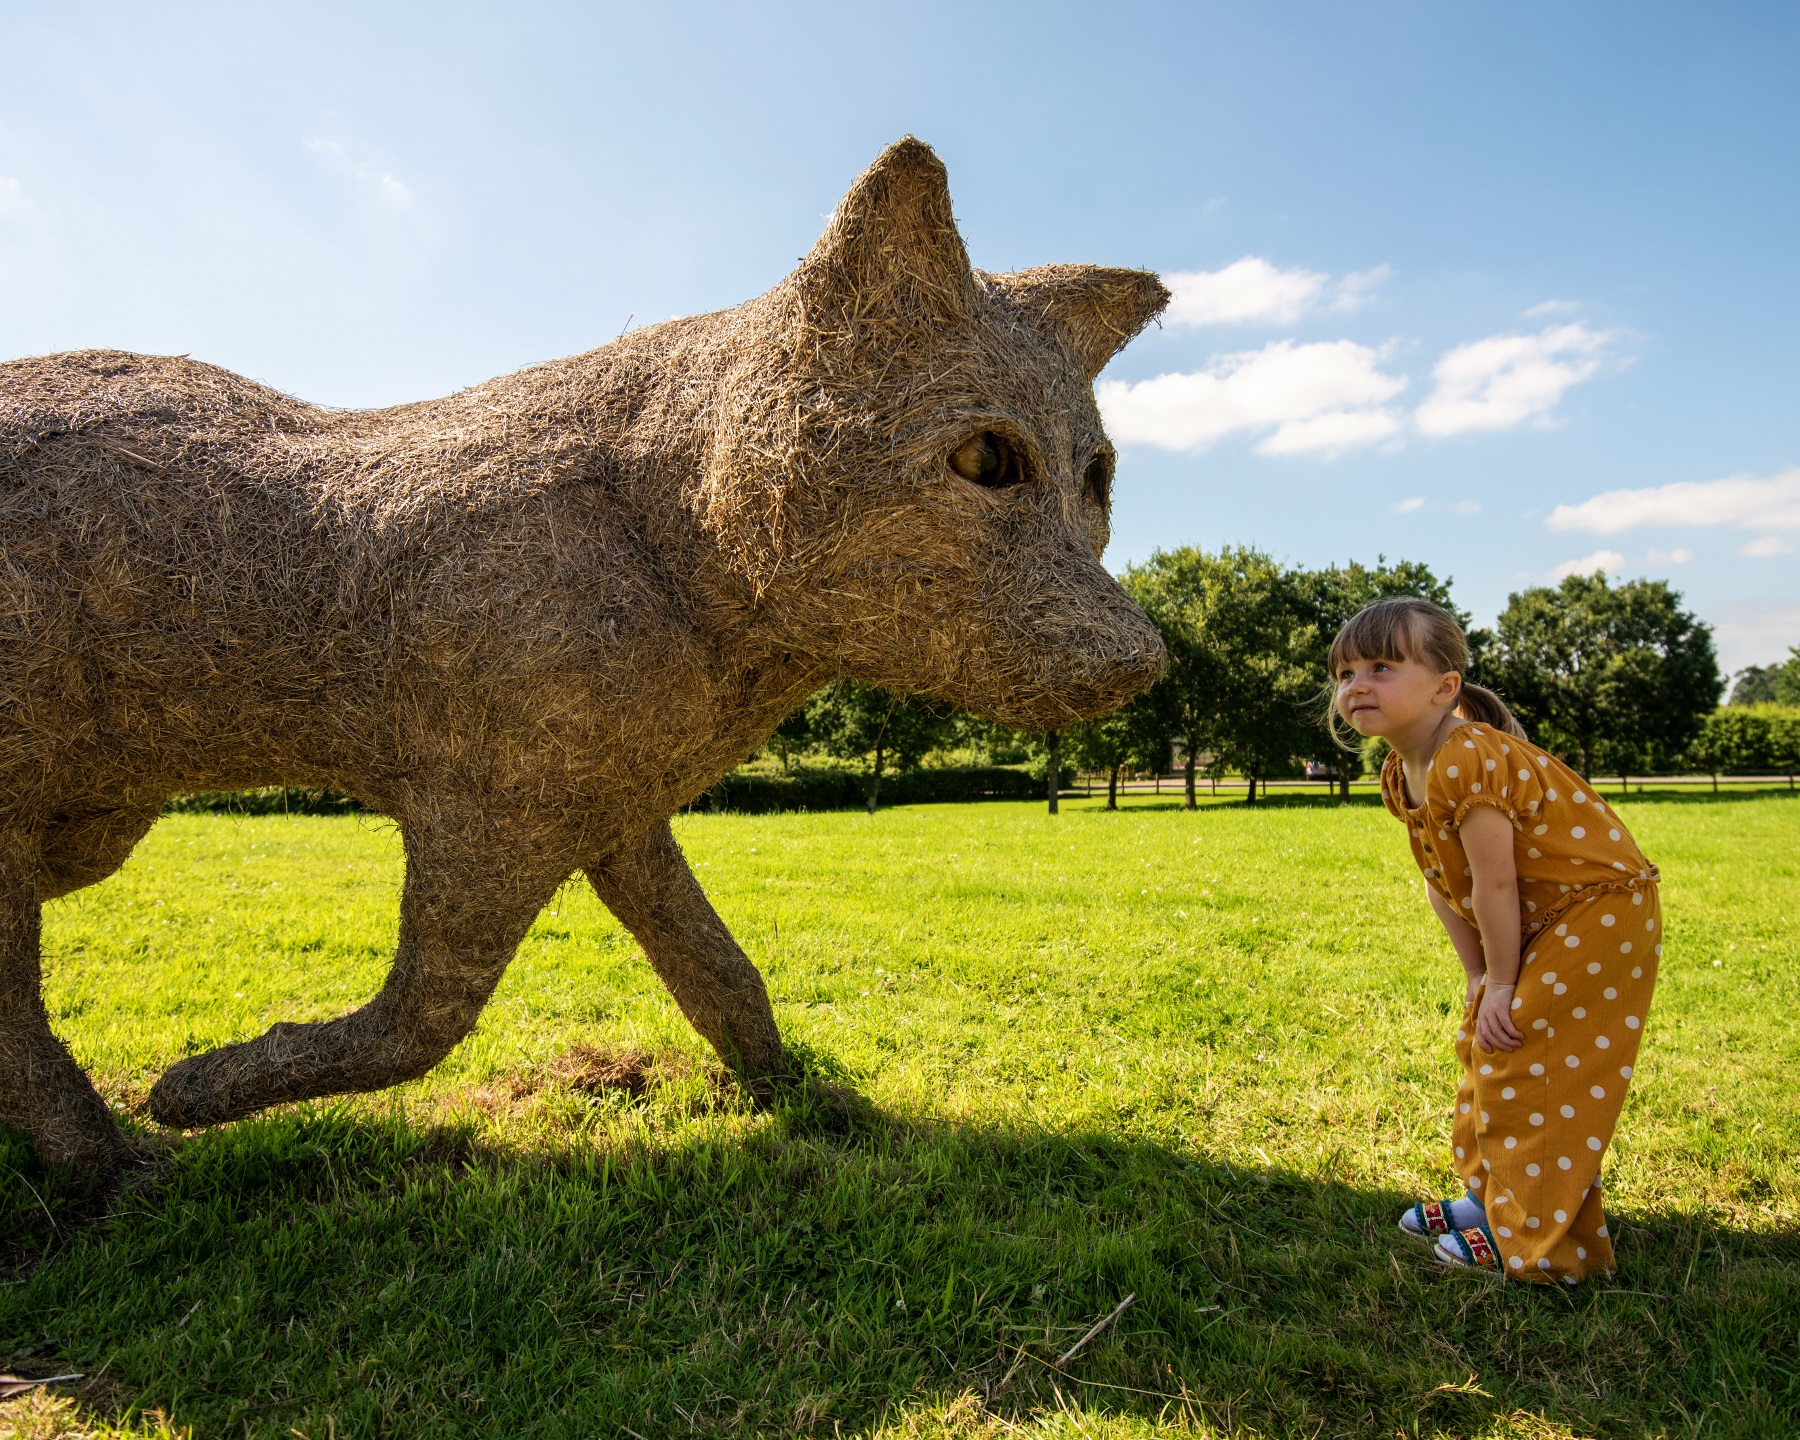 Giant straw animal sculptures go on display at Longleat safari park - BBC  News